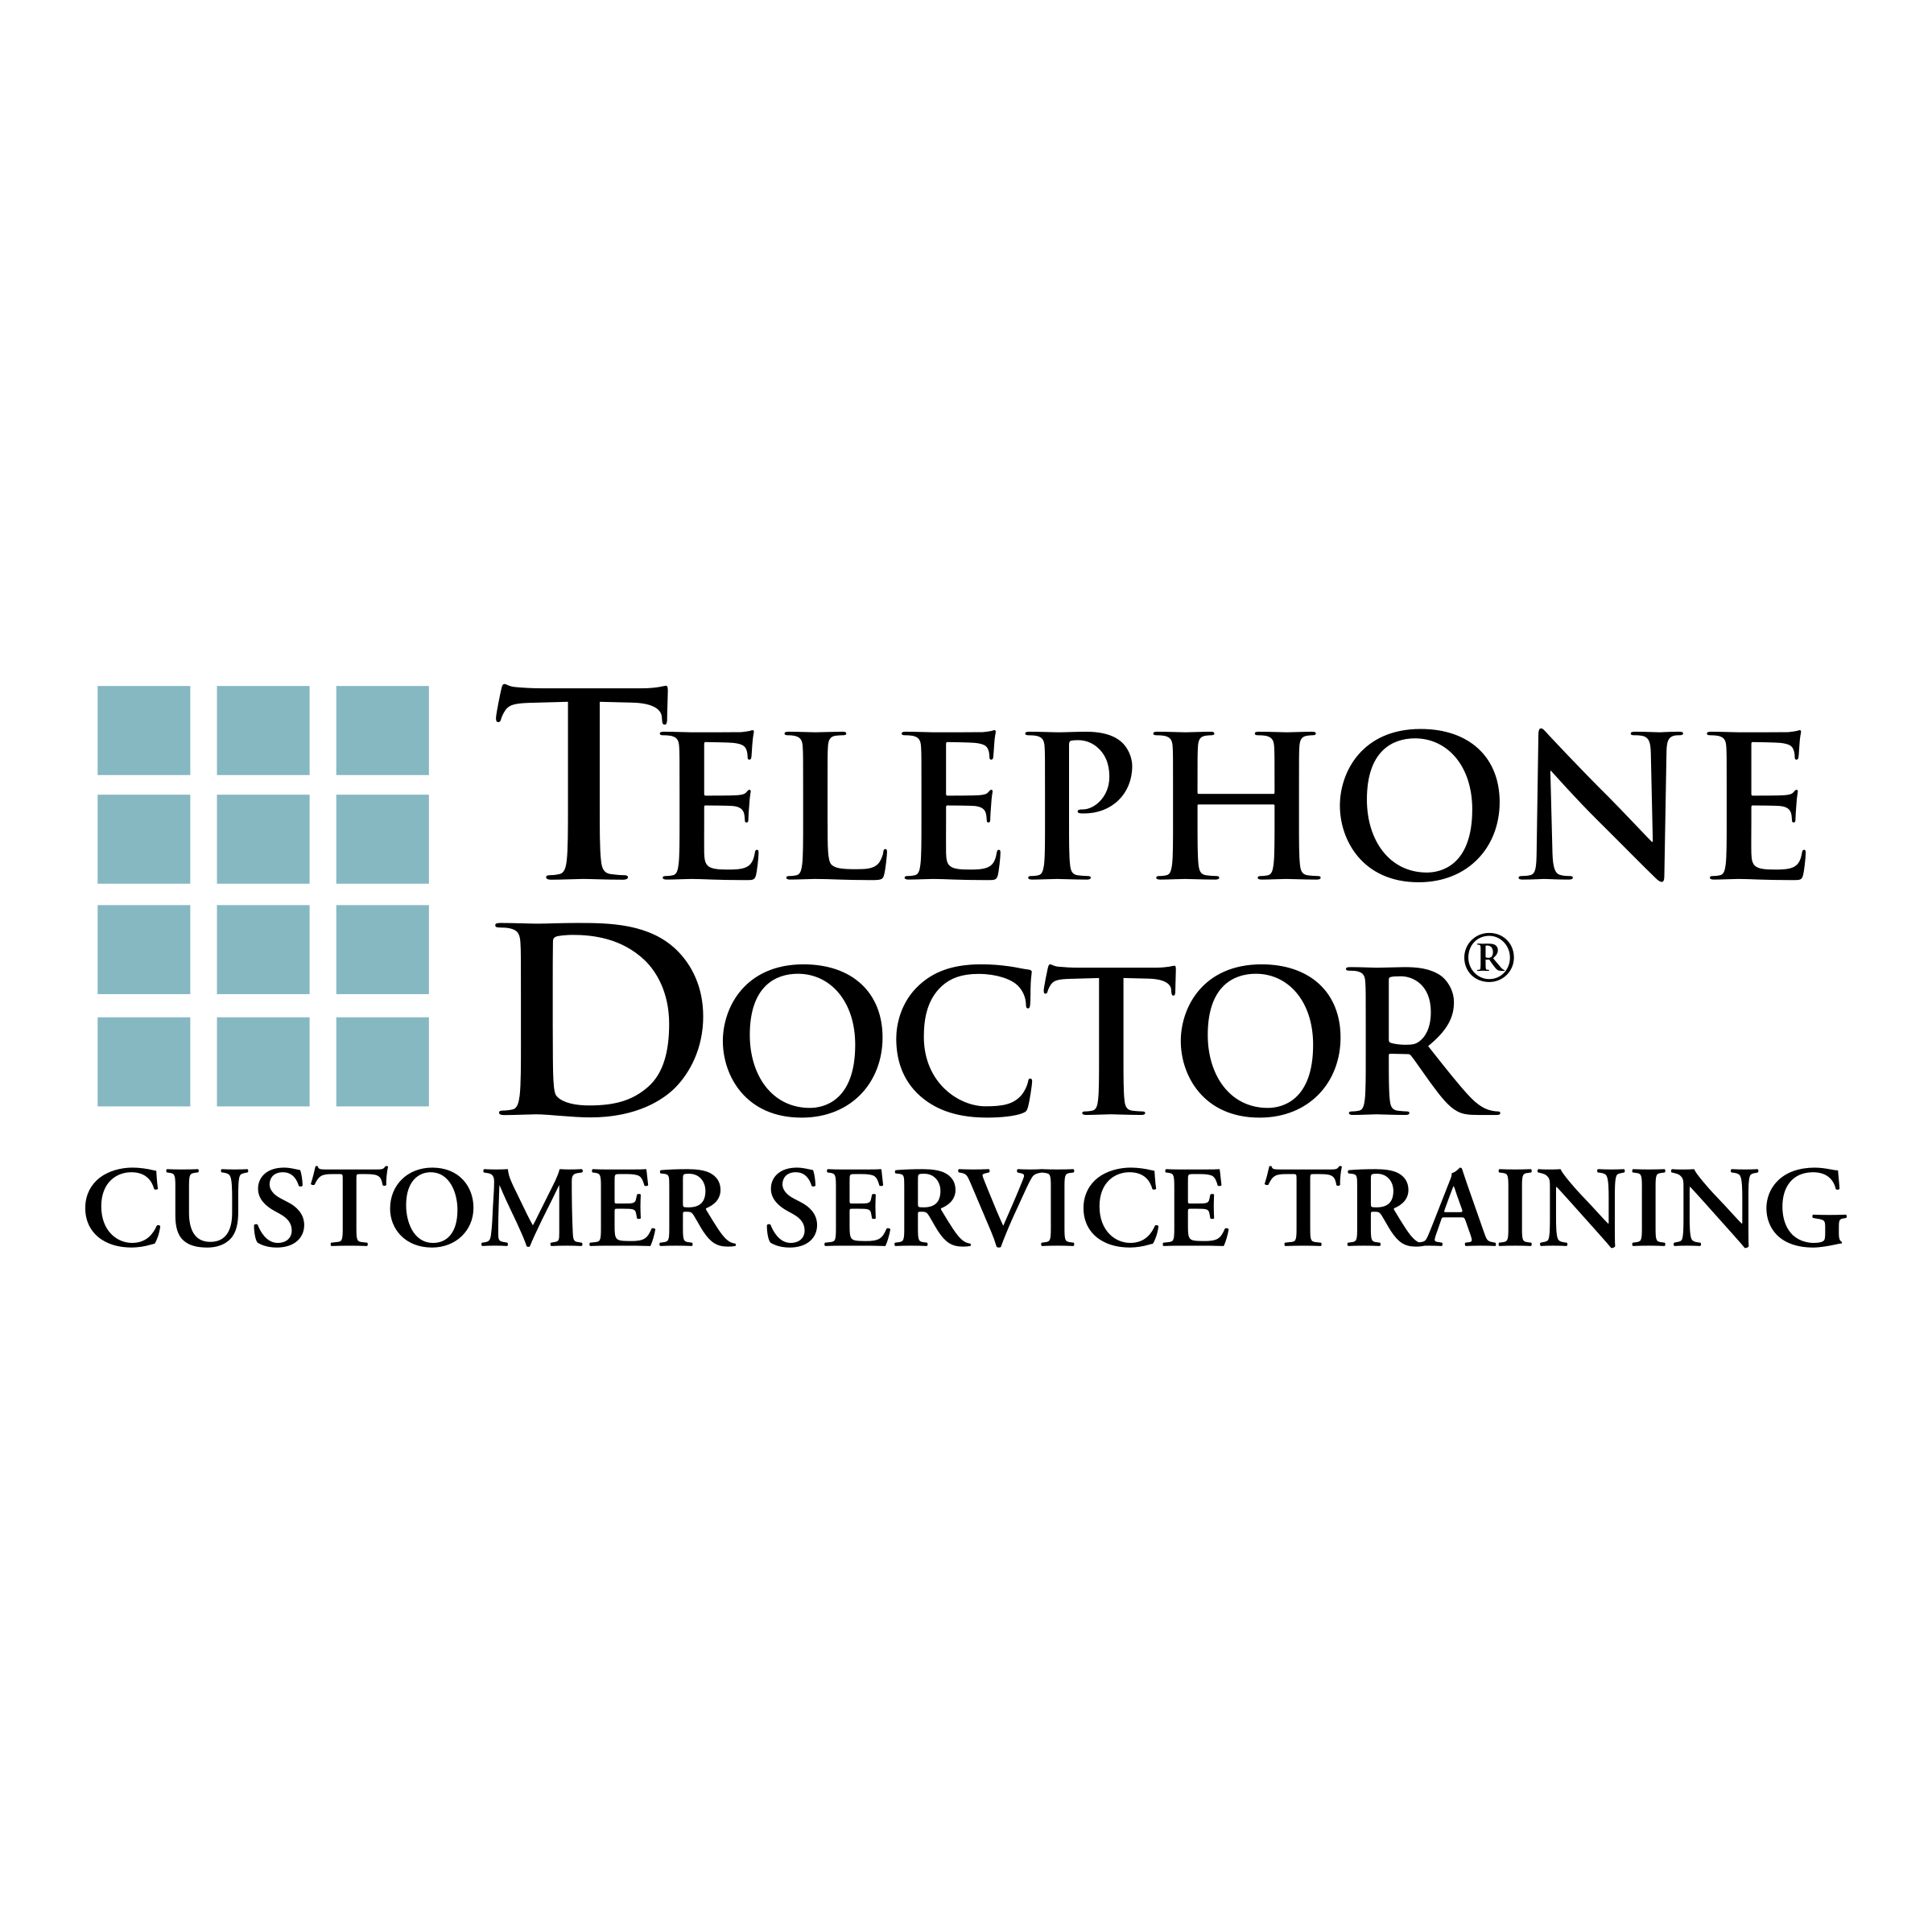 Telephone Transparent Logo - Telephone Doctor Logo PNG Transparent & SVG Vector - Freebie Supply